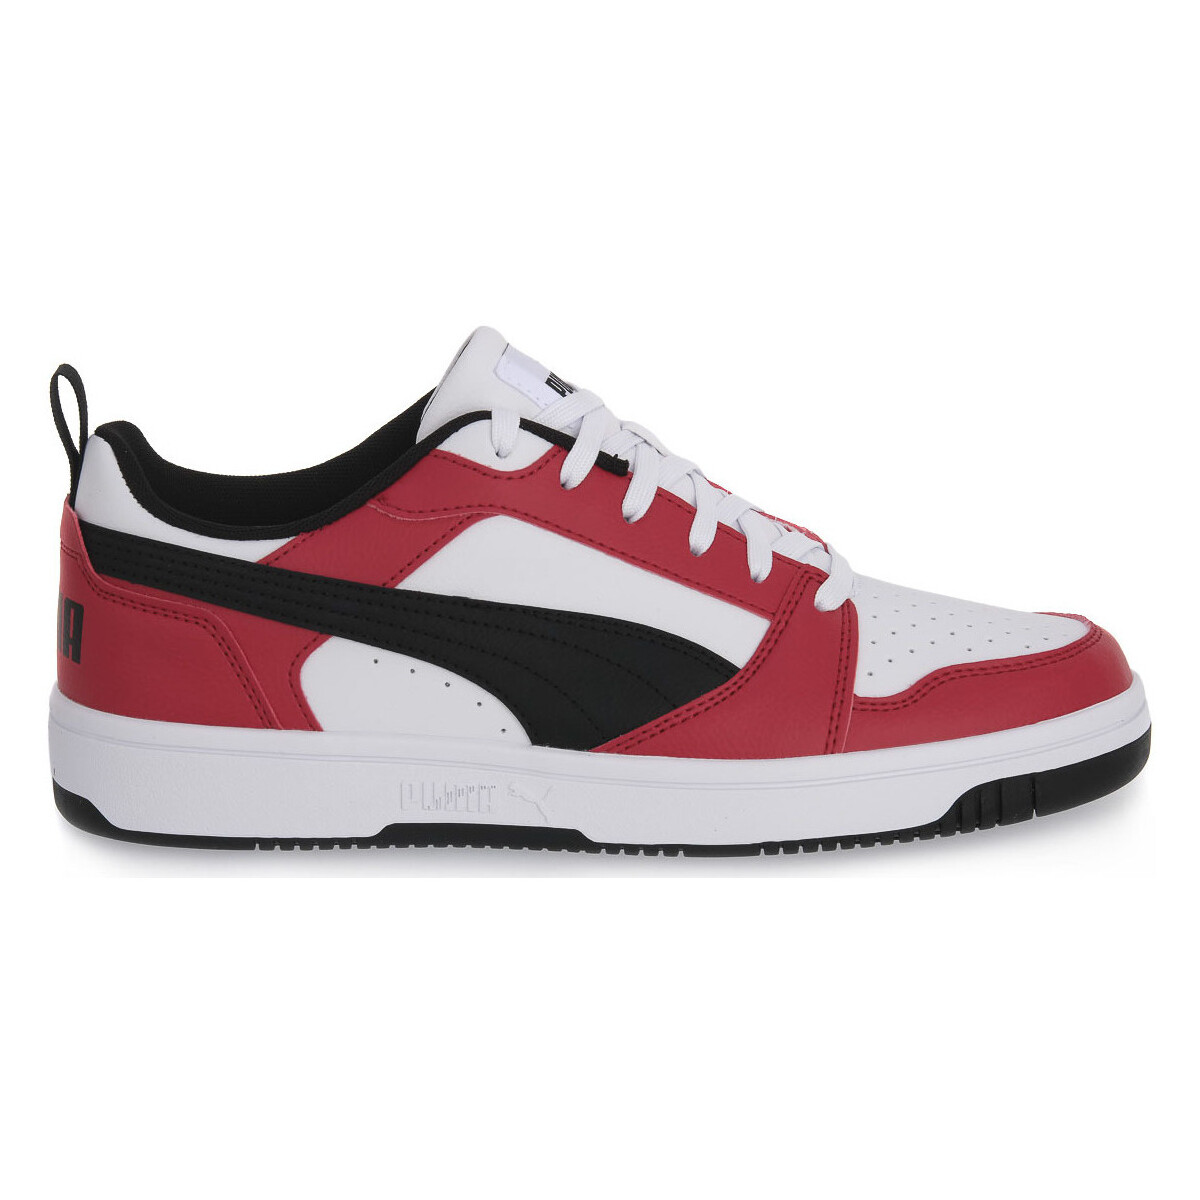 Schuhe Herren Sneaker Puma 17 REBOUND V6 HI Weiss